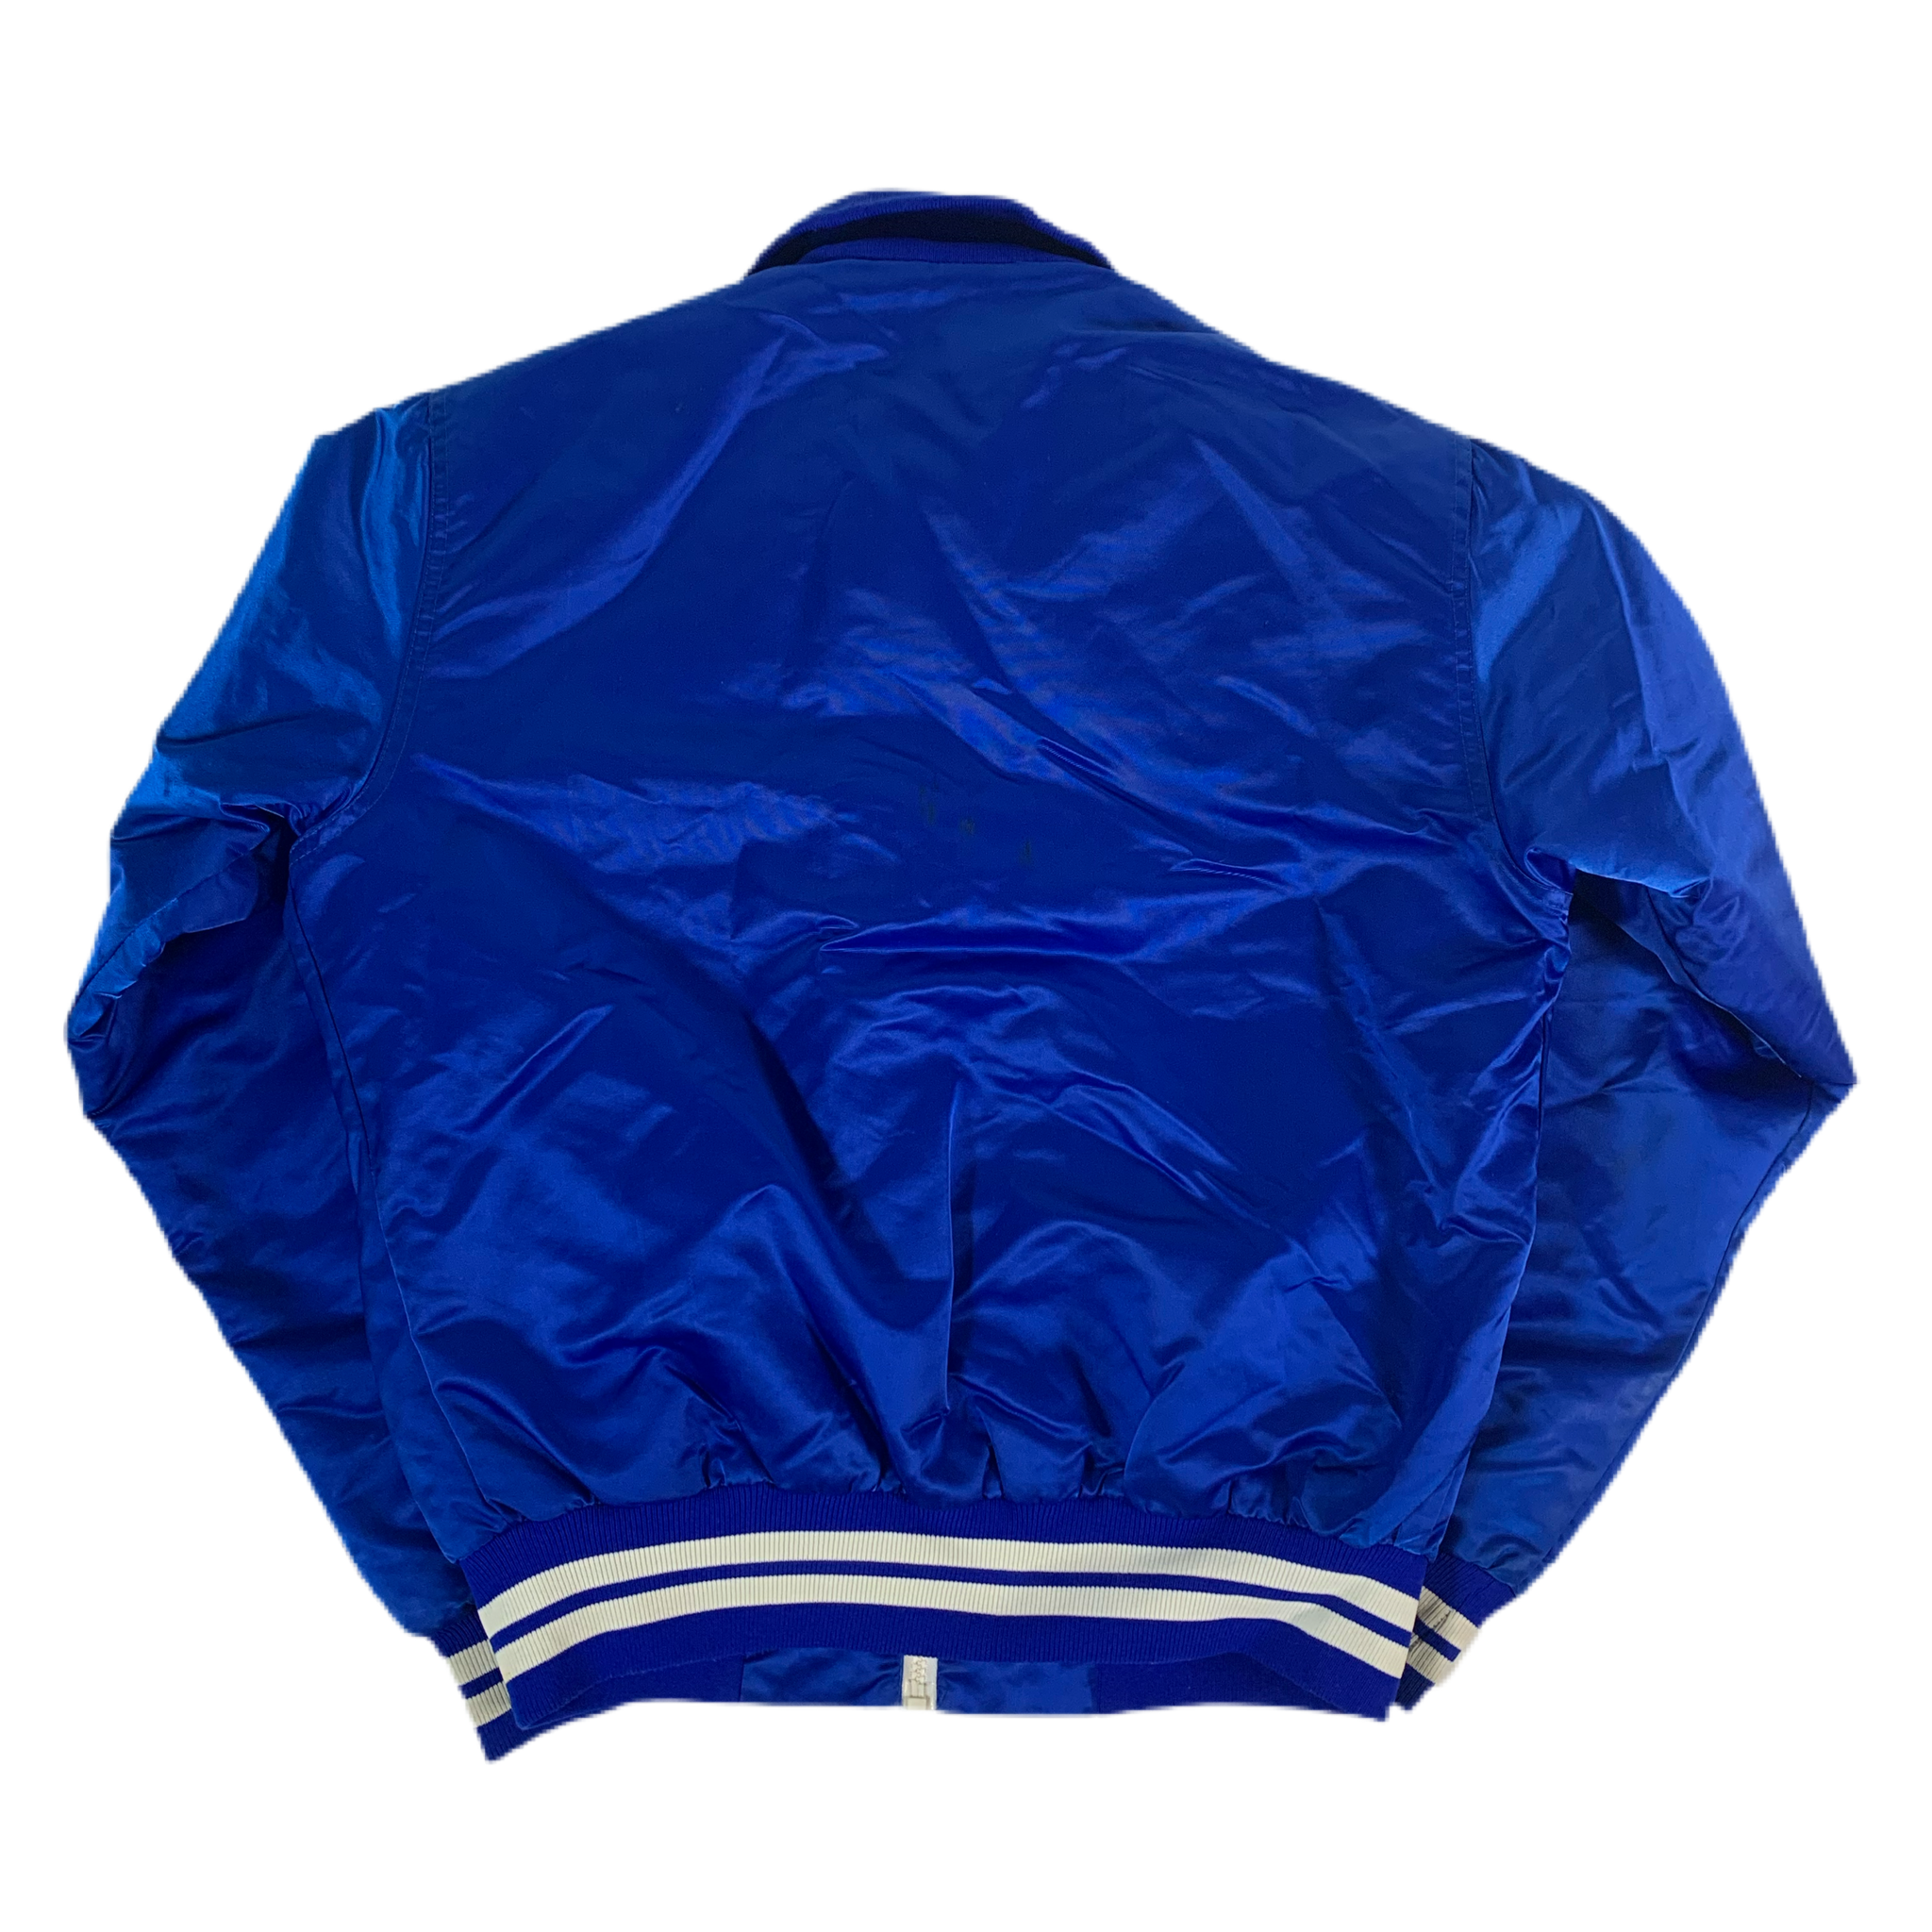 Los Angeles Dodgers Jacket | 1980s Vintage Style Bomber Jacket